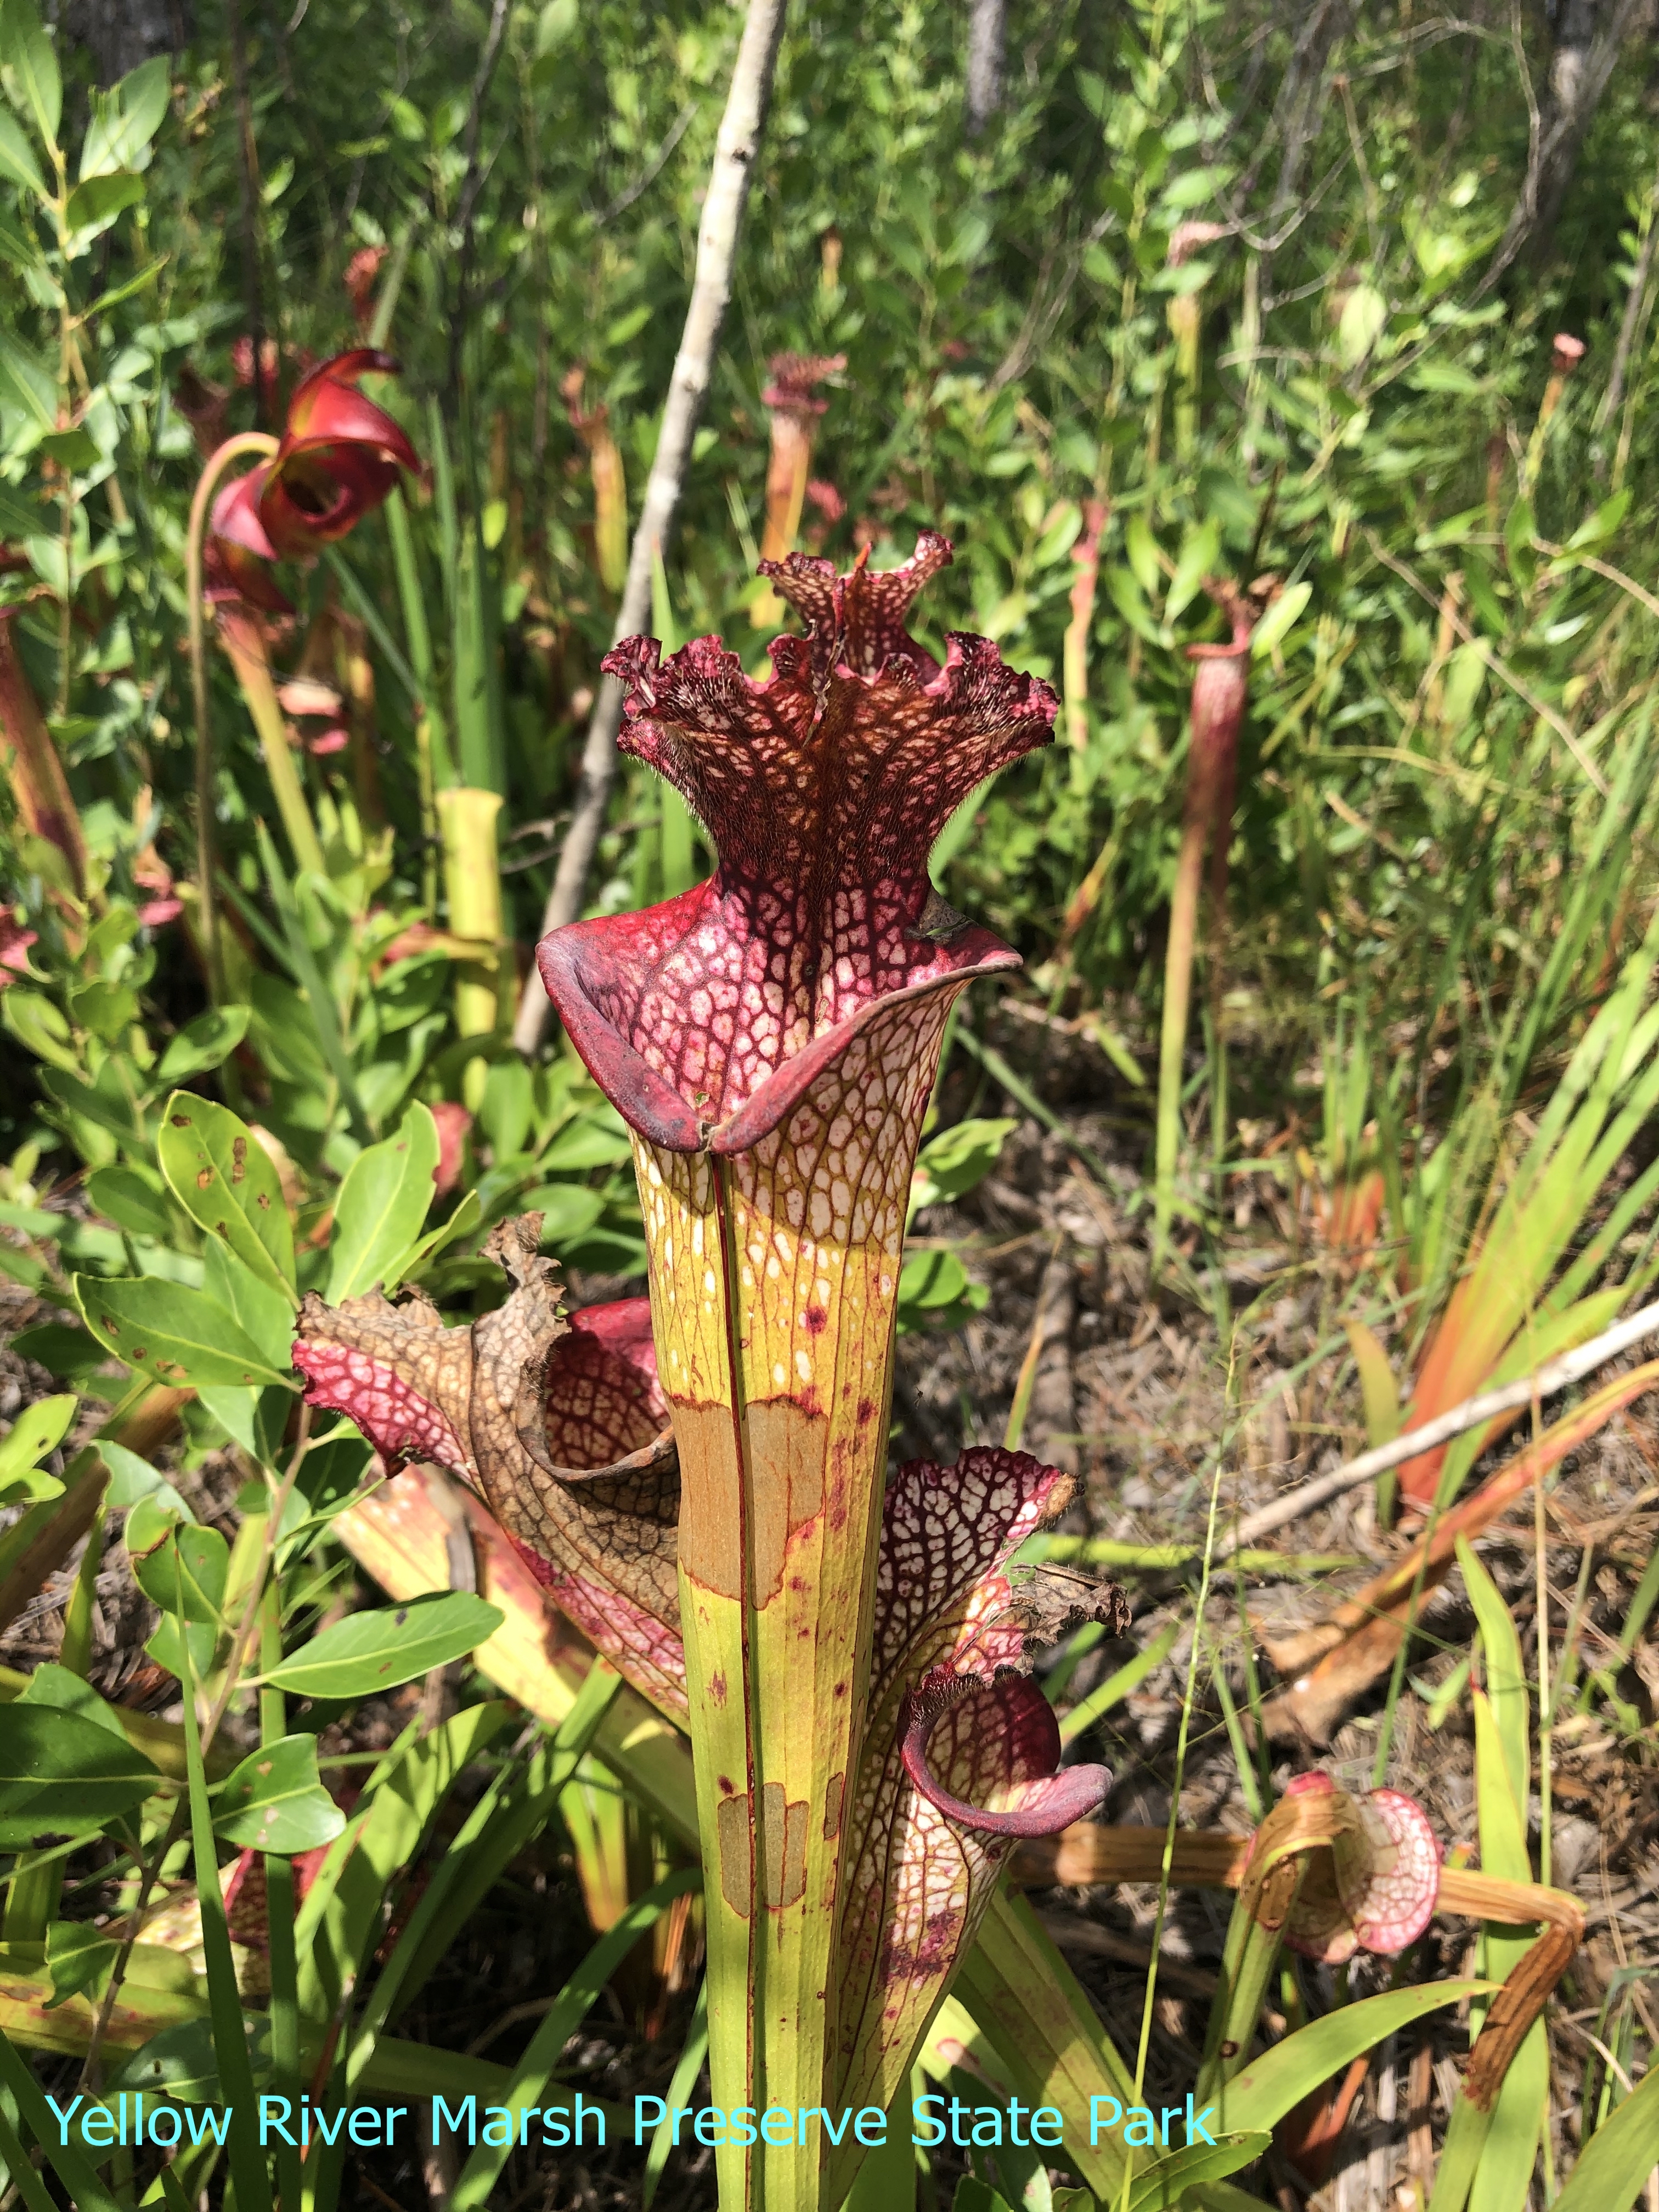 Yellow River Marsh Preserve State Park pitcher plants